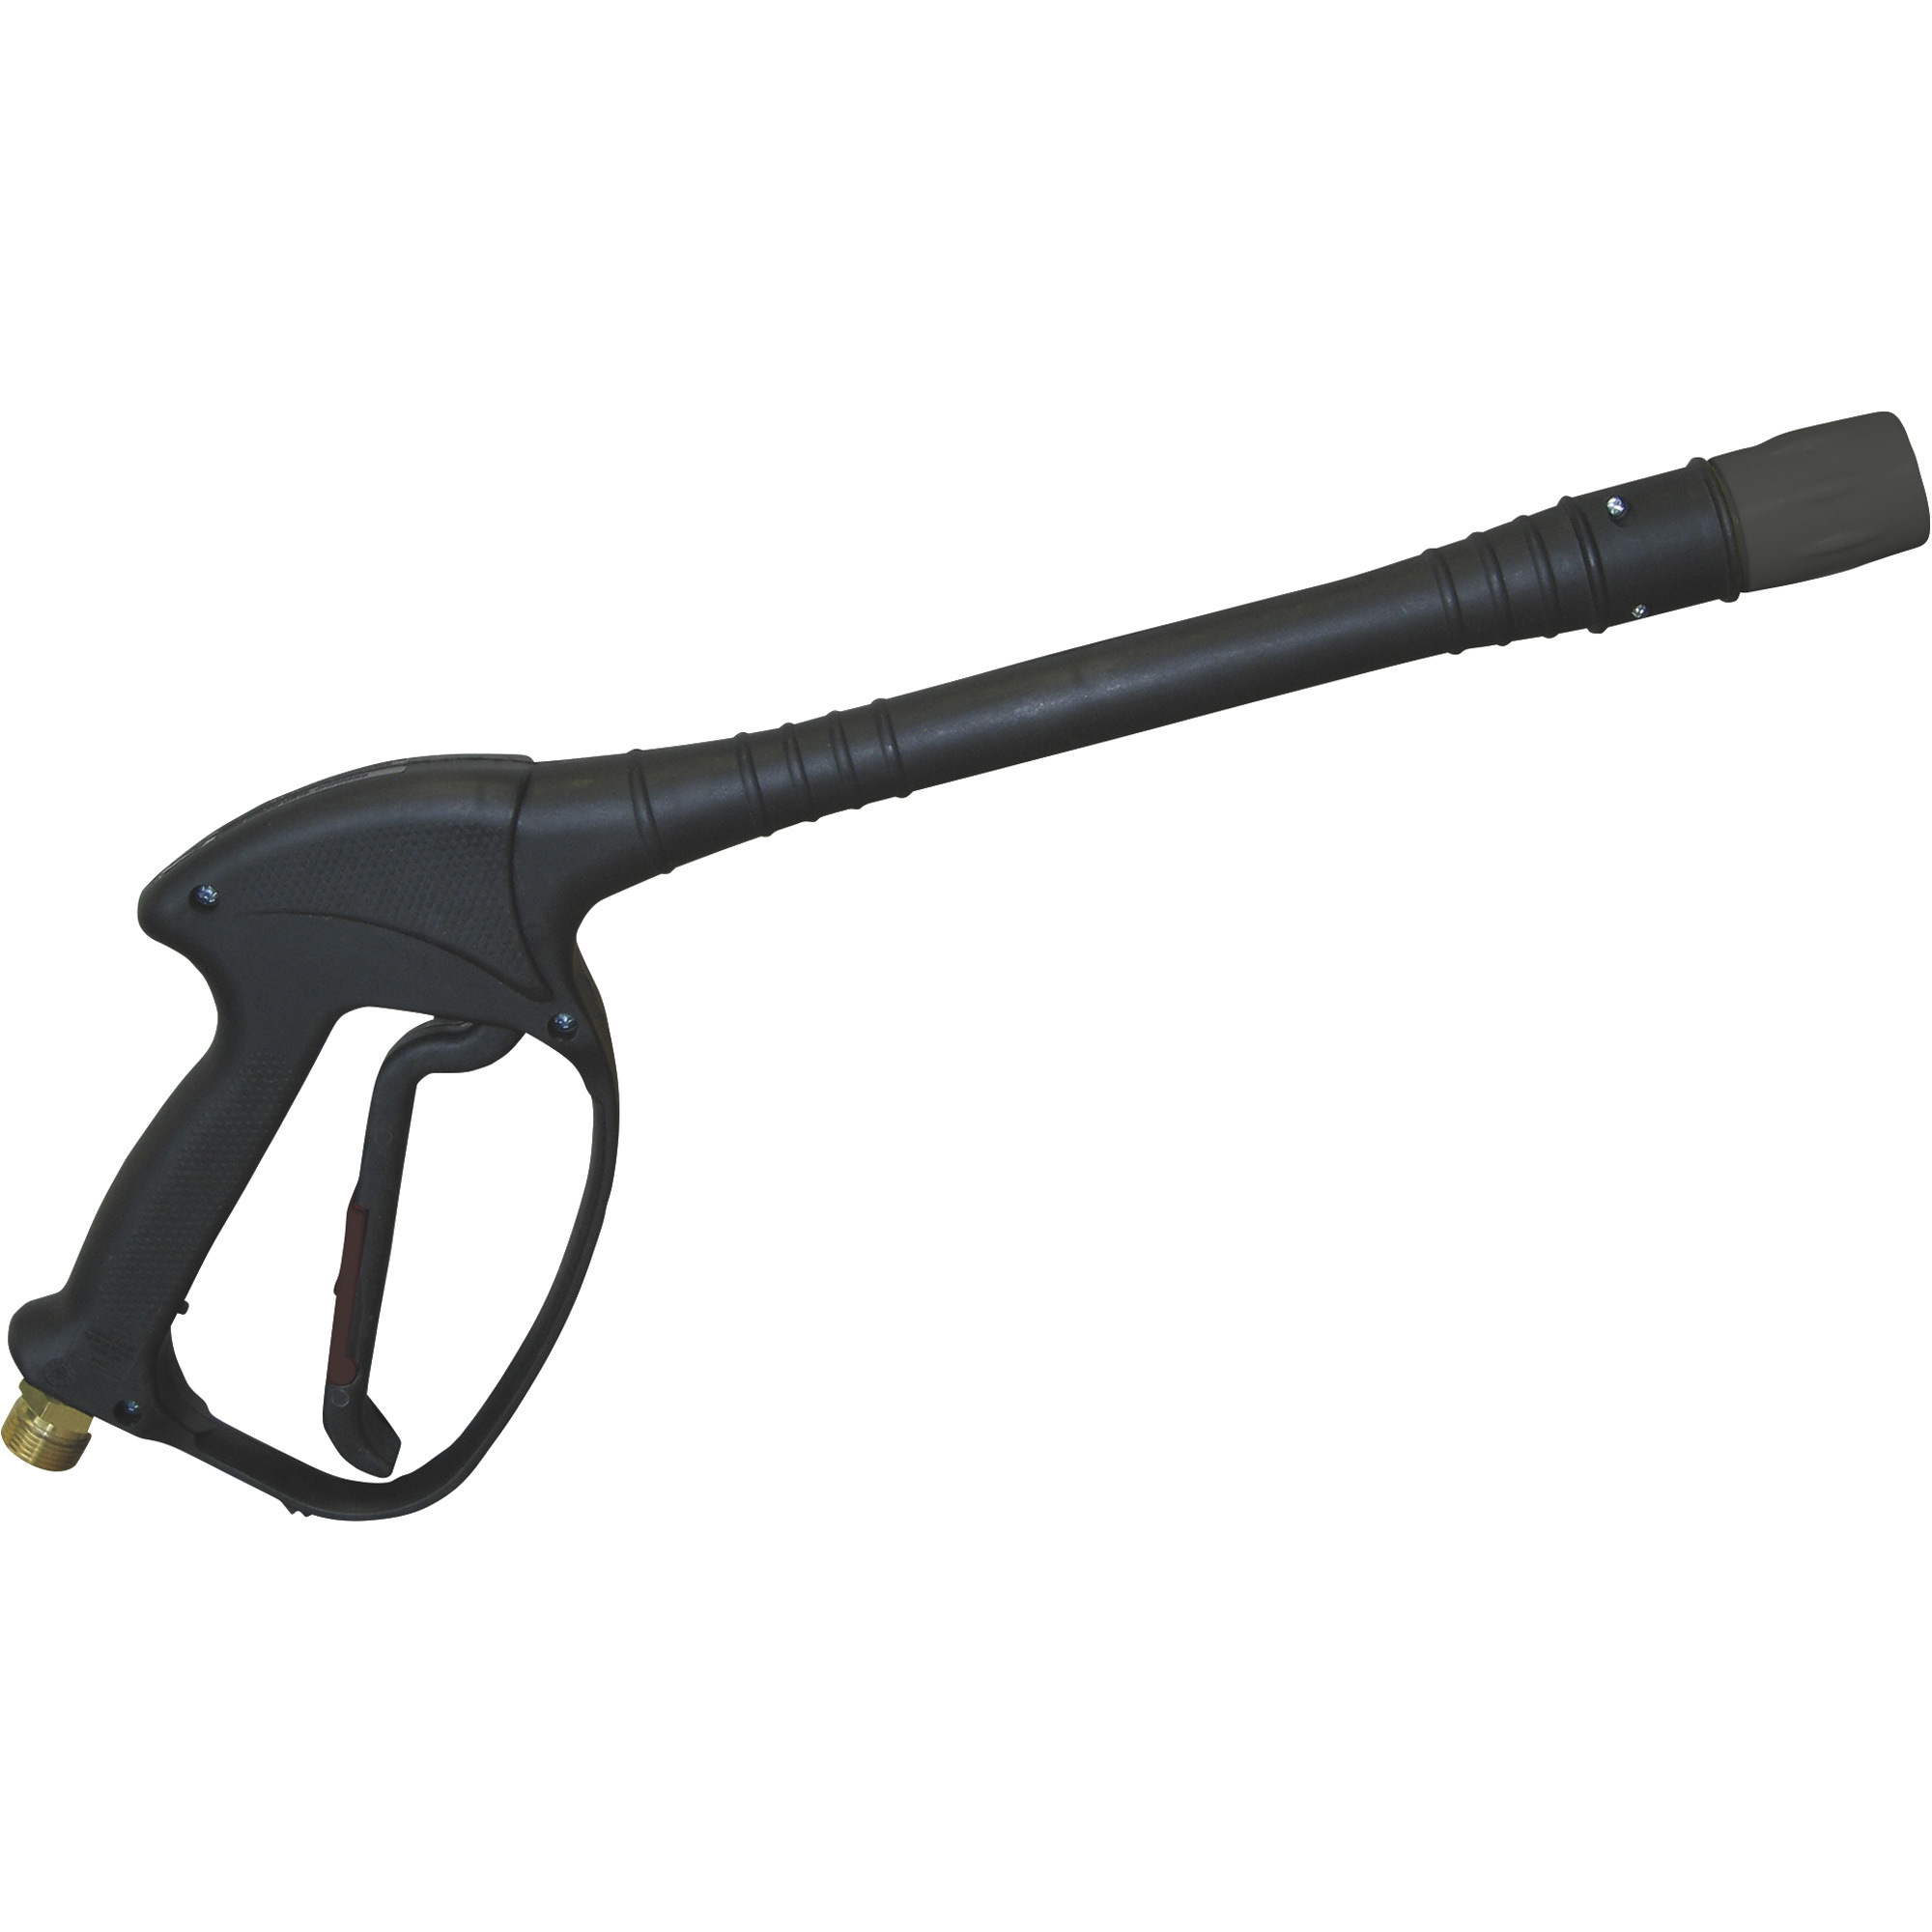 Powerhorse Pressure Washer Trigger Spray Gun/Lance Combo â 3200 PSI, 6.0 GPM